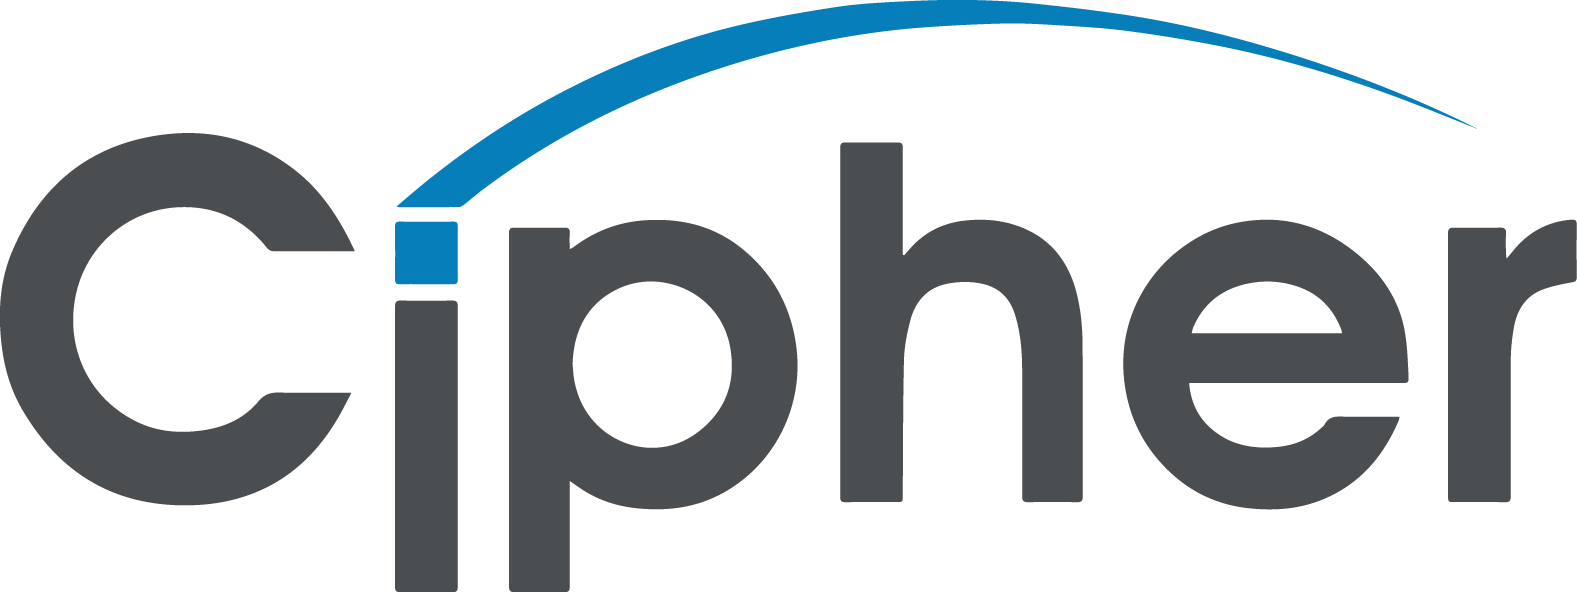 Cipher Systems, LLC Company Logo